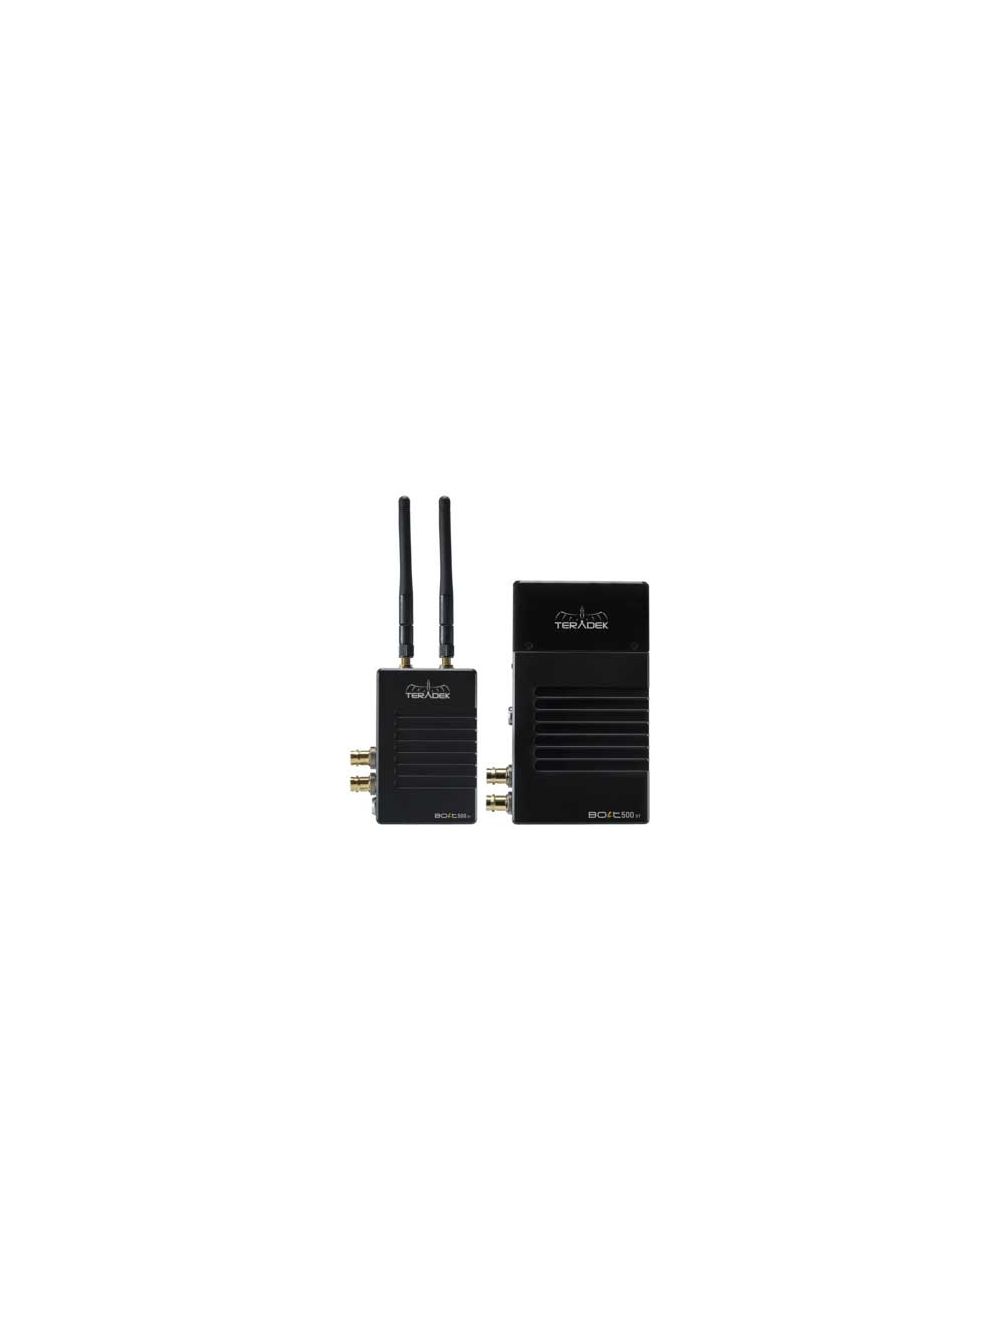 Teradek Bolt 6 LT HDMI Wireless Transmitter/Receiver Kit (Gold